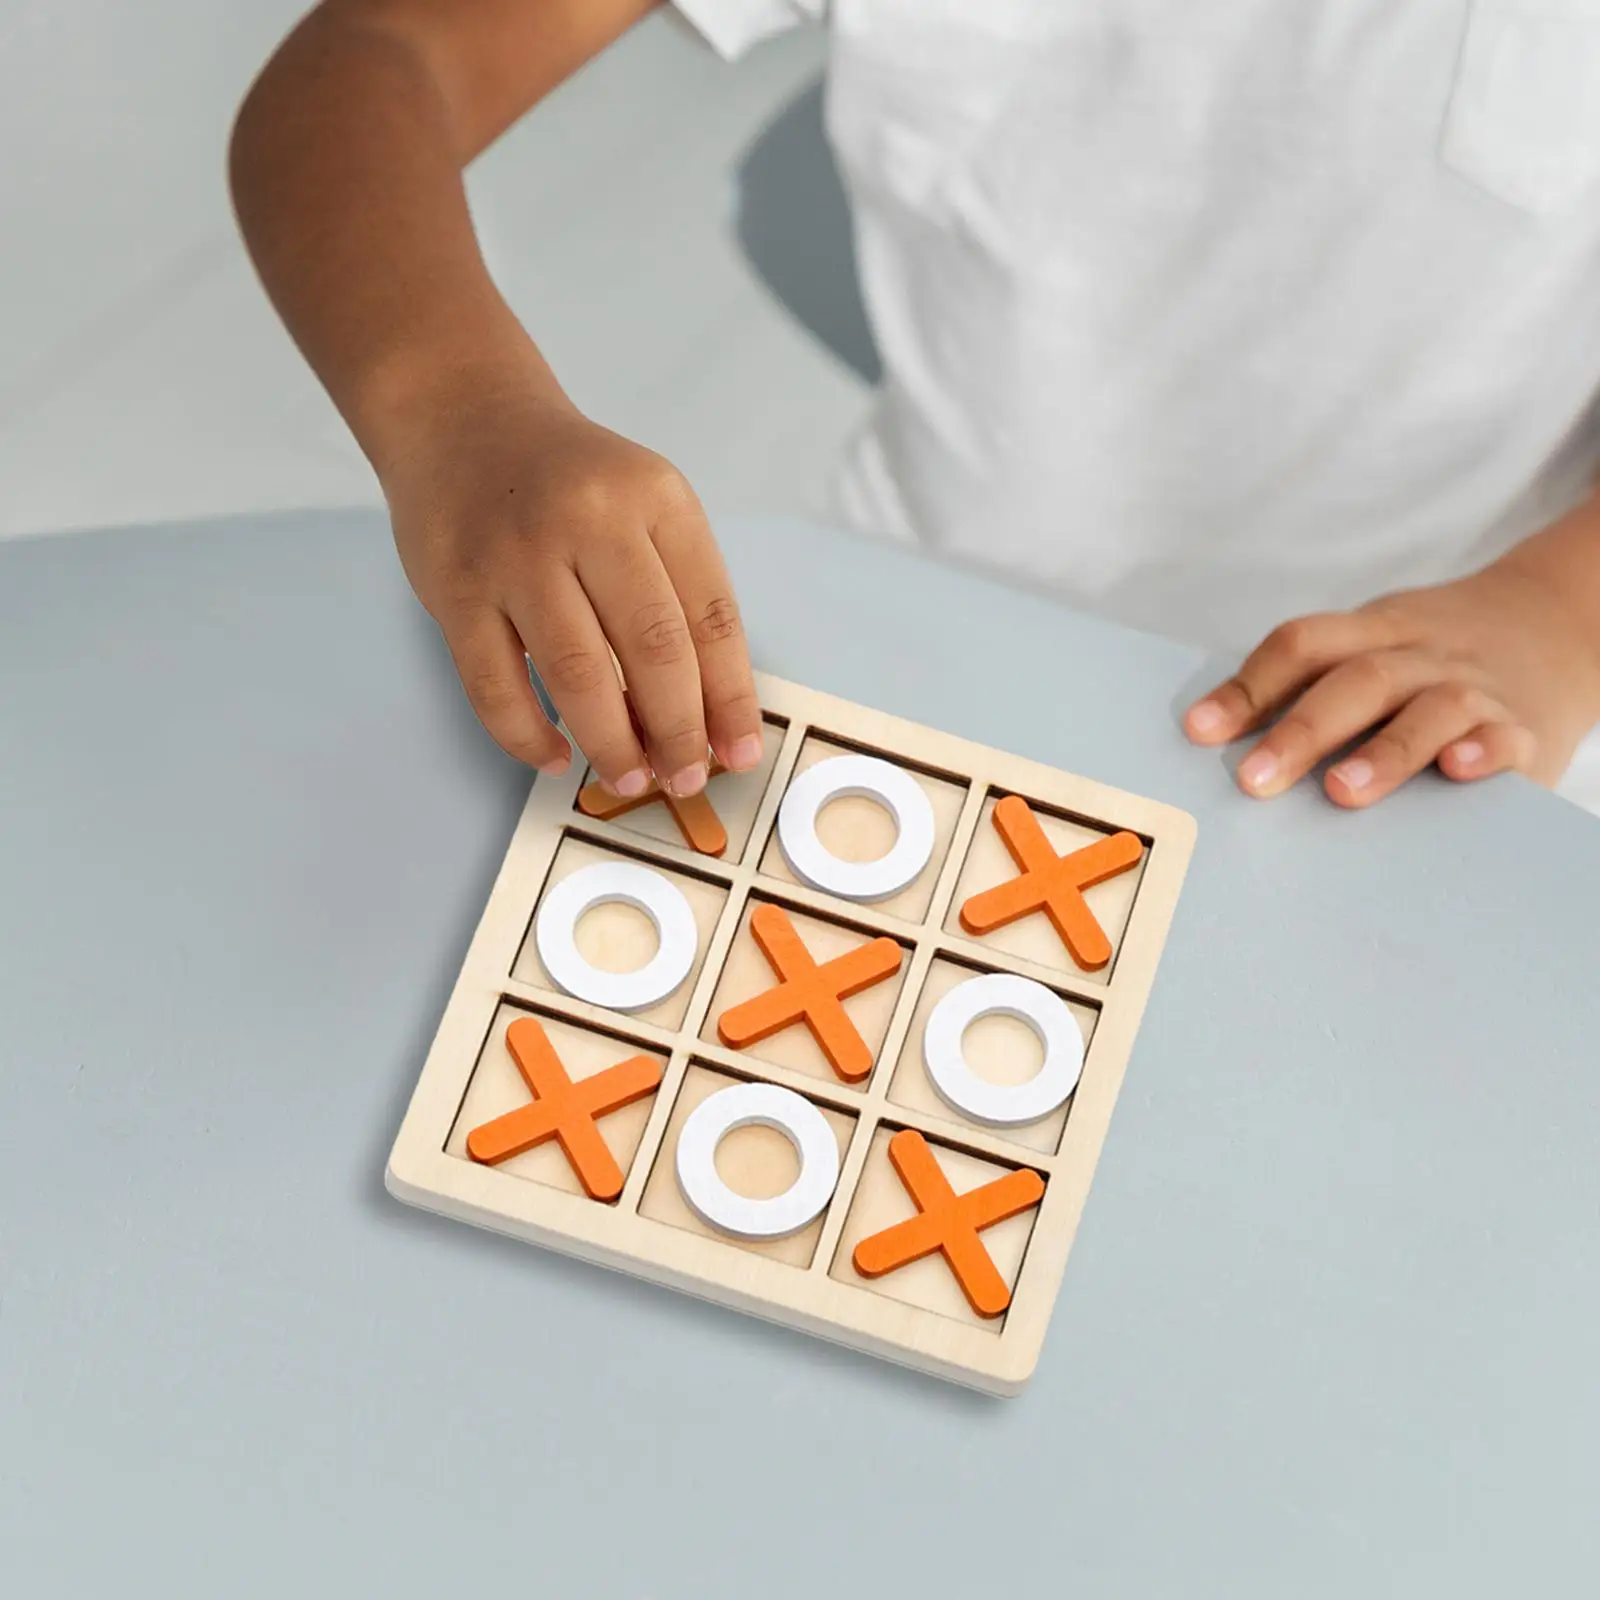 HeroNeo Board Games Tic Tac Toe Fun Family Games to Play in Box